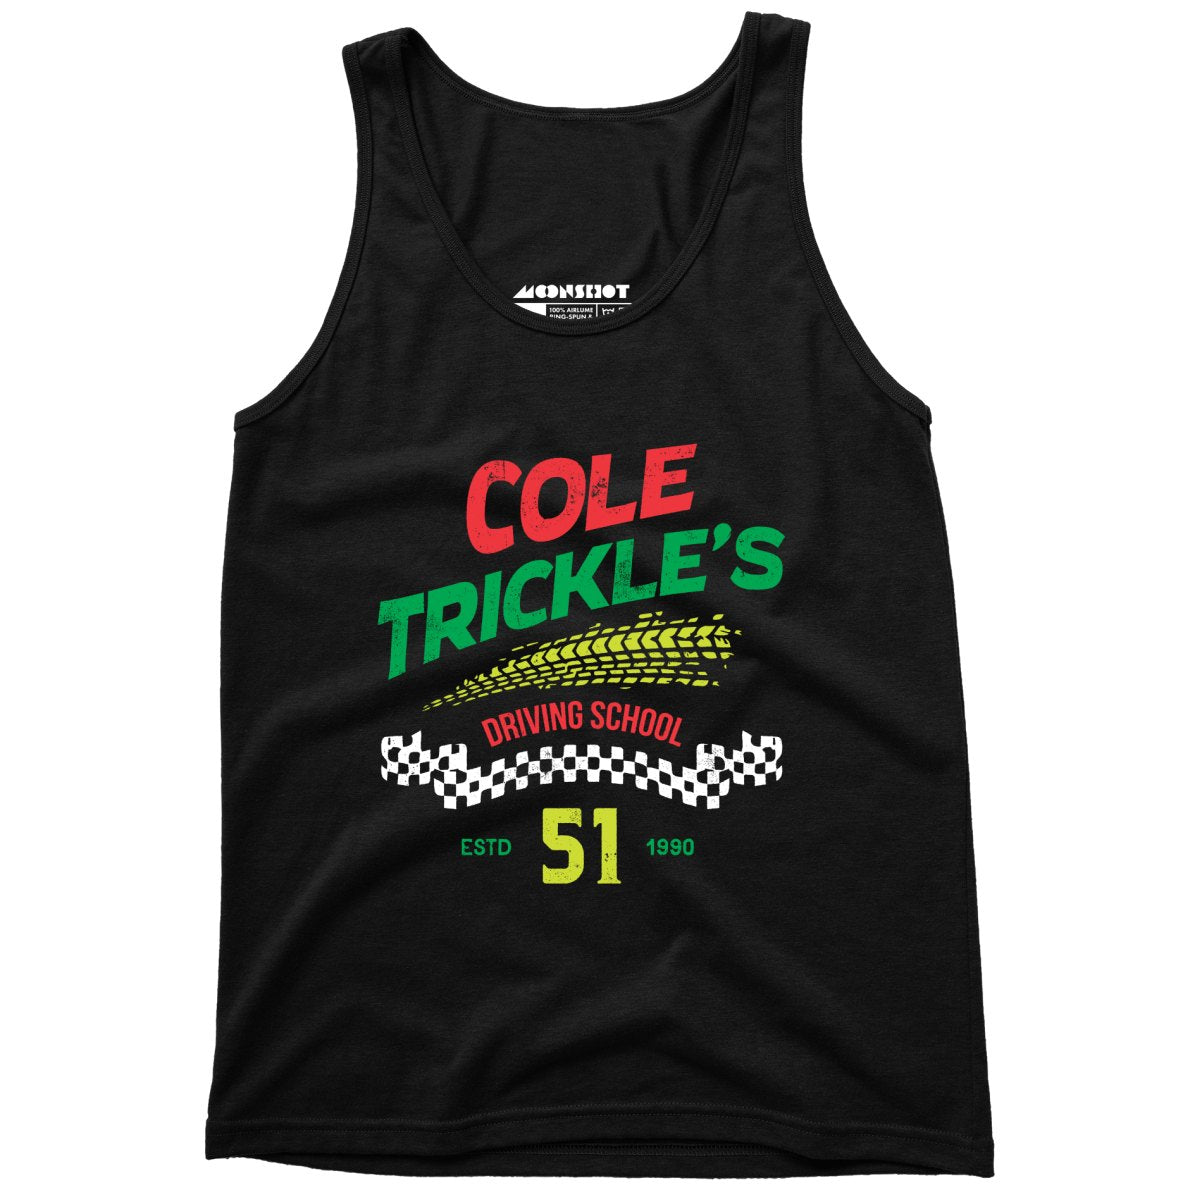 Cole Trickle's Driving School - Unisex Tank Top